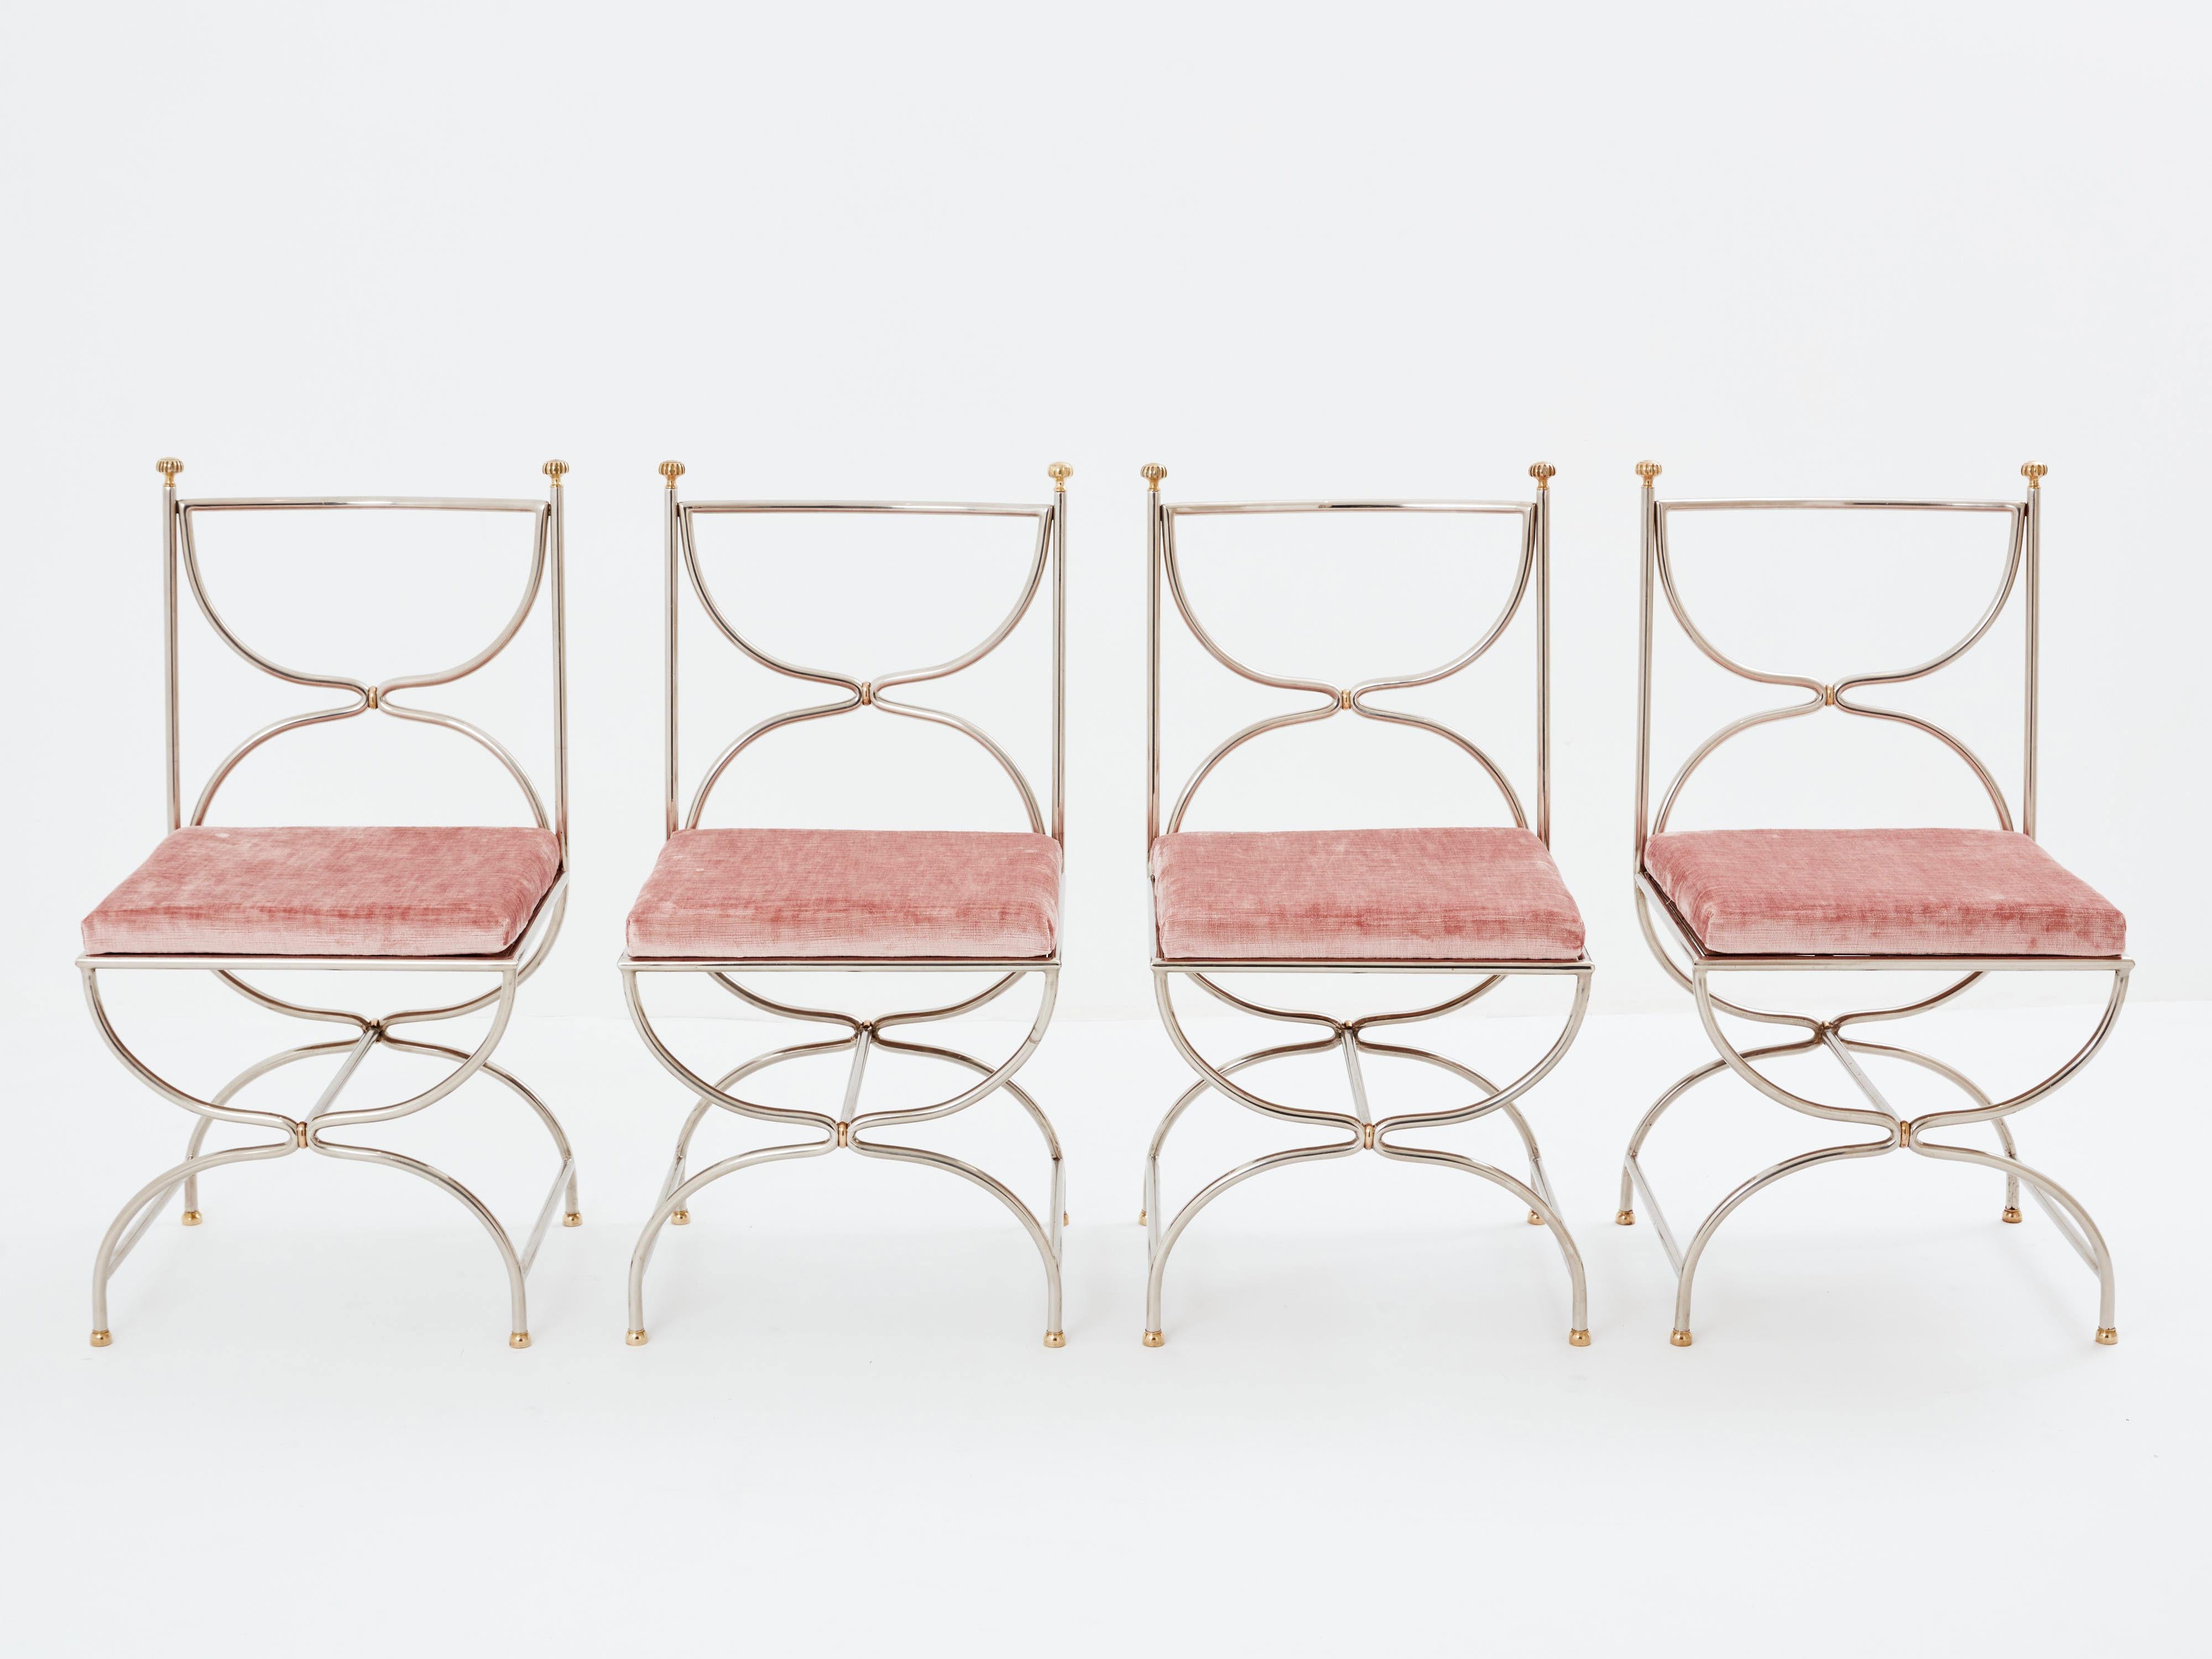 Maison Jansen 12 curule chairs steel brass pink velvet 1960s For Sale 4